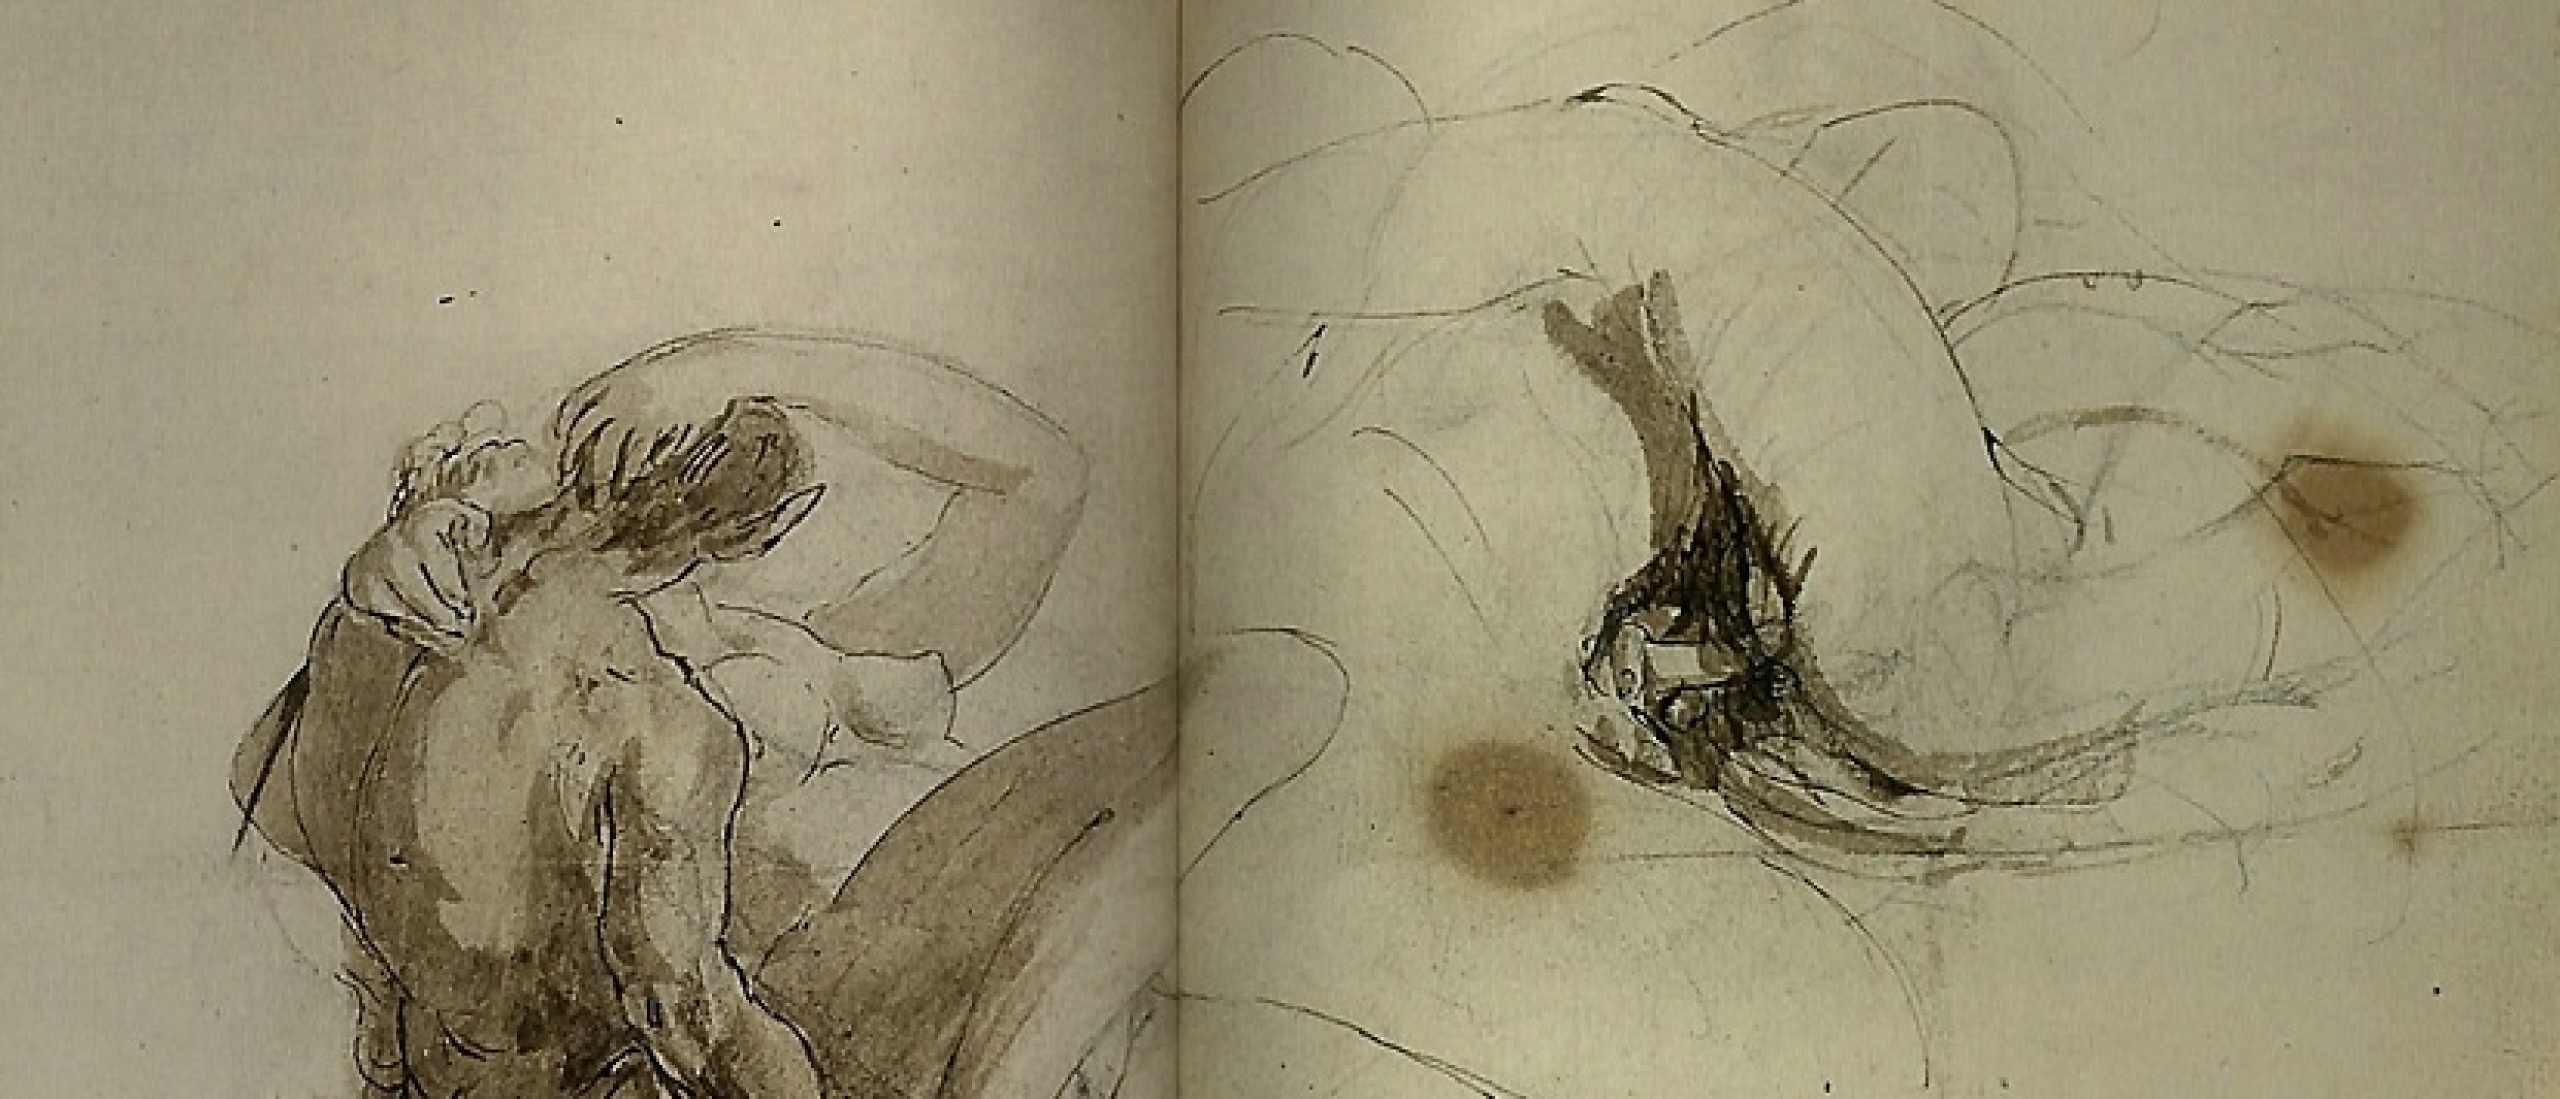 Joseph Mallord William Turner's drawings